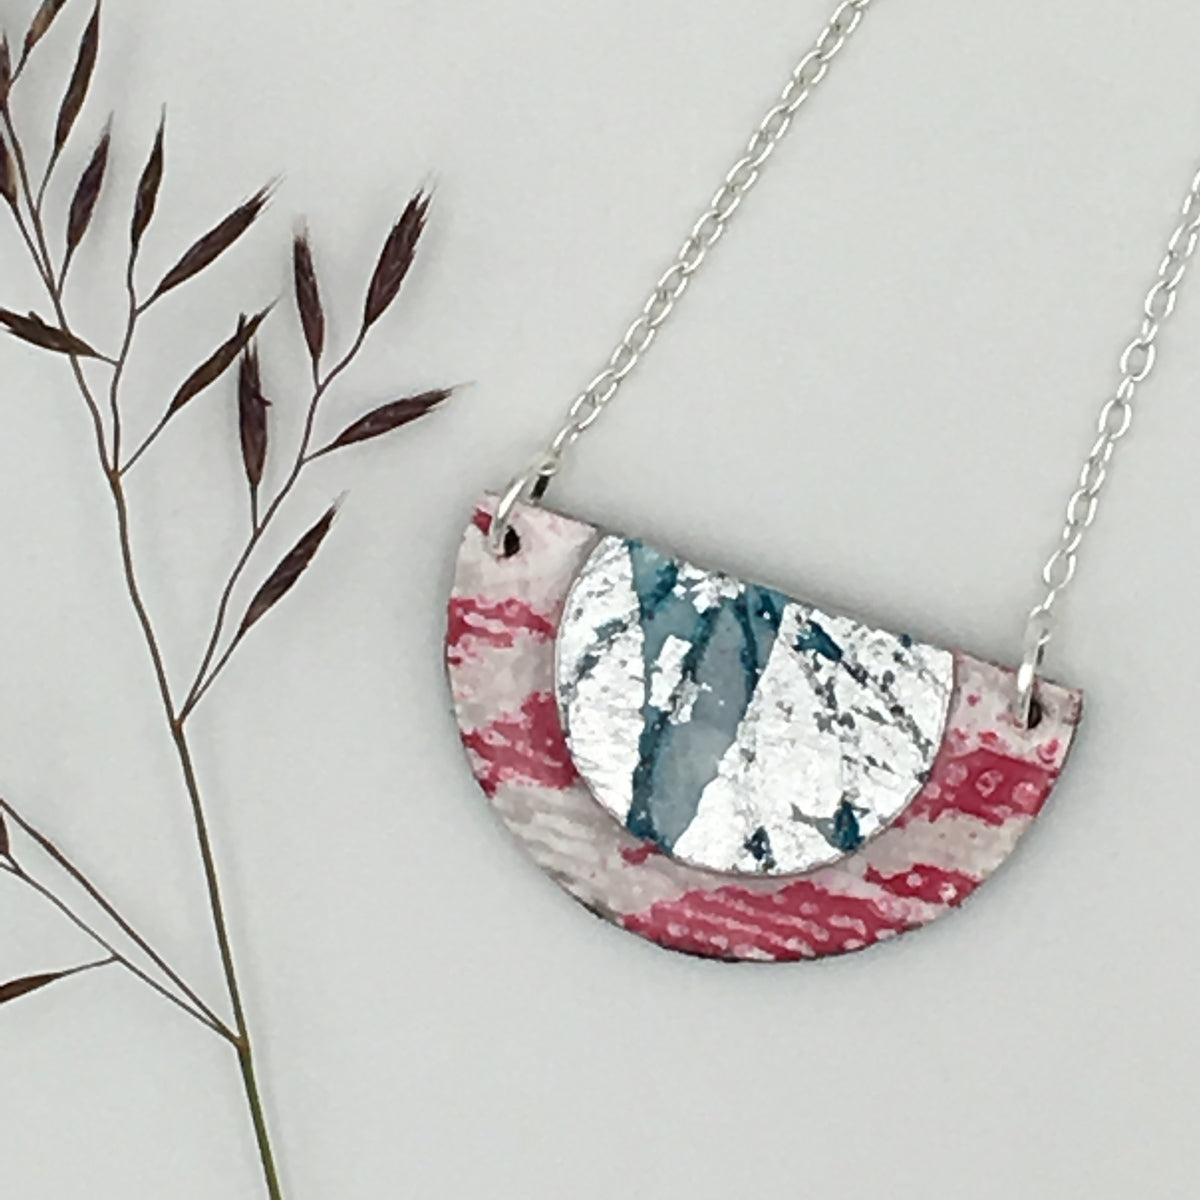 Ovette batik textile necklace in pink/silver/aqua